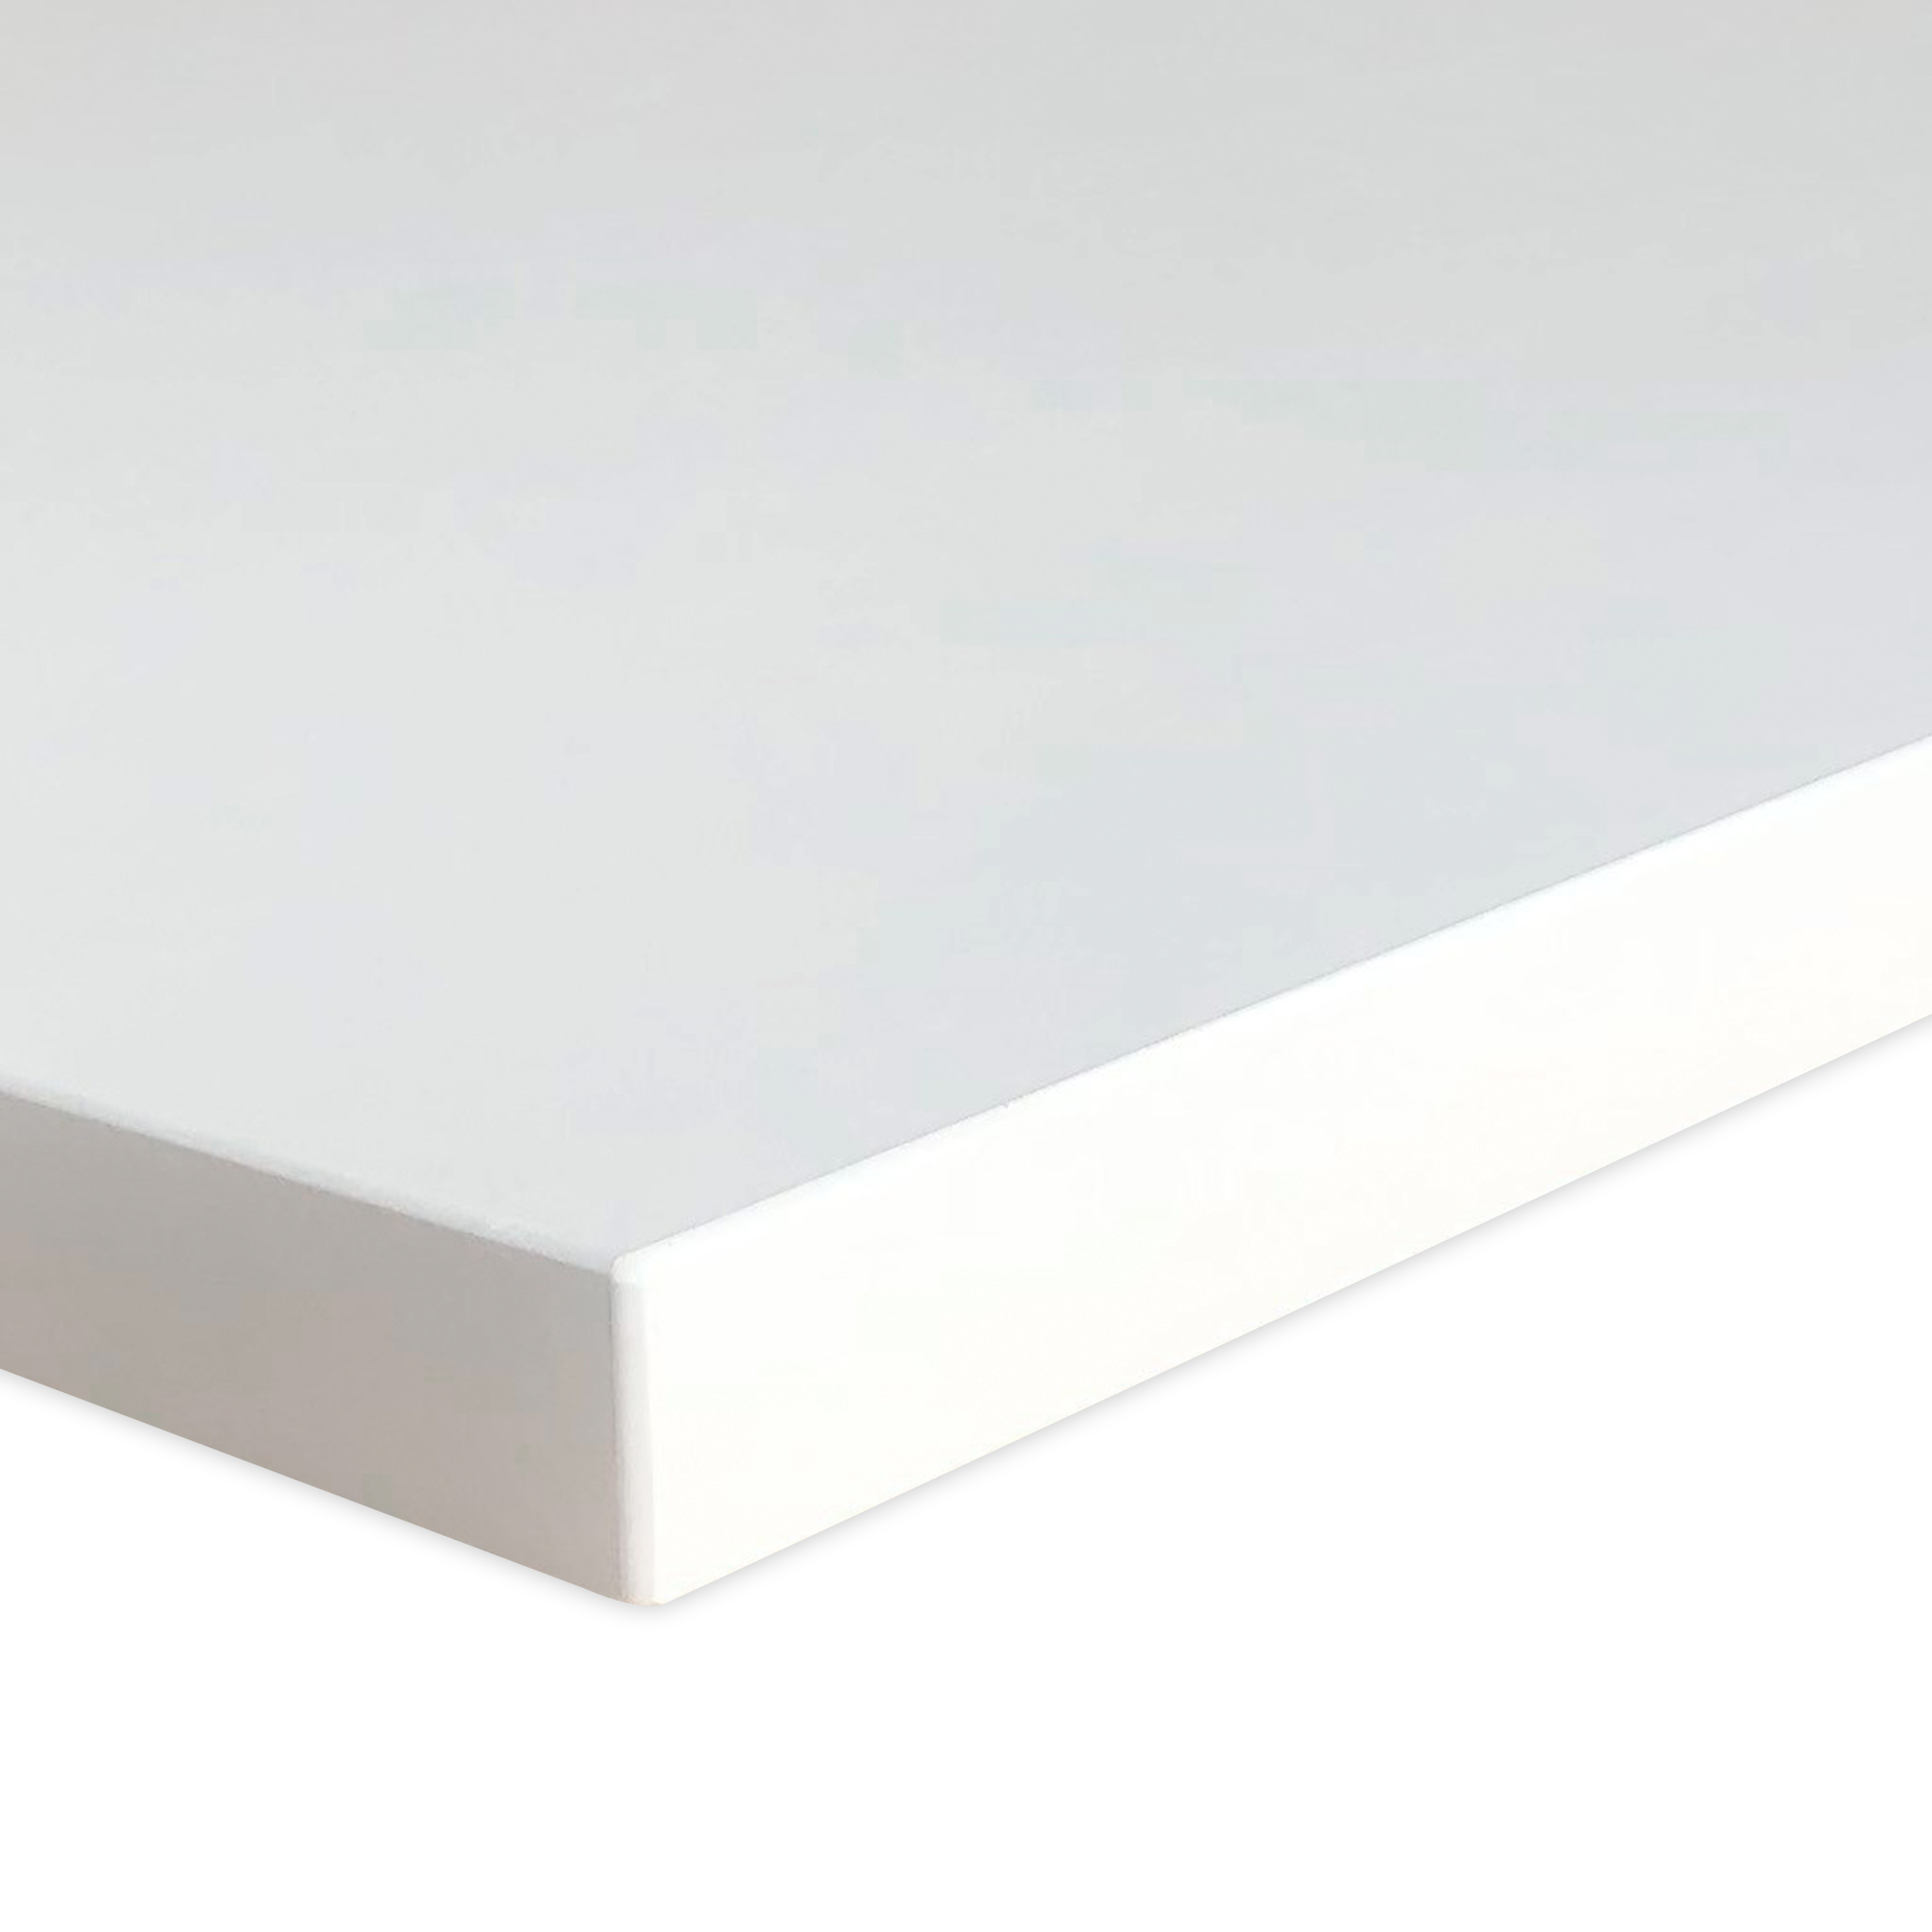 Tabletop | 080x60 cm | White